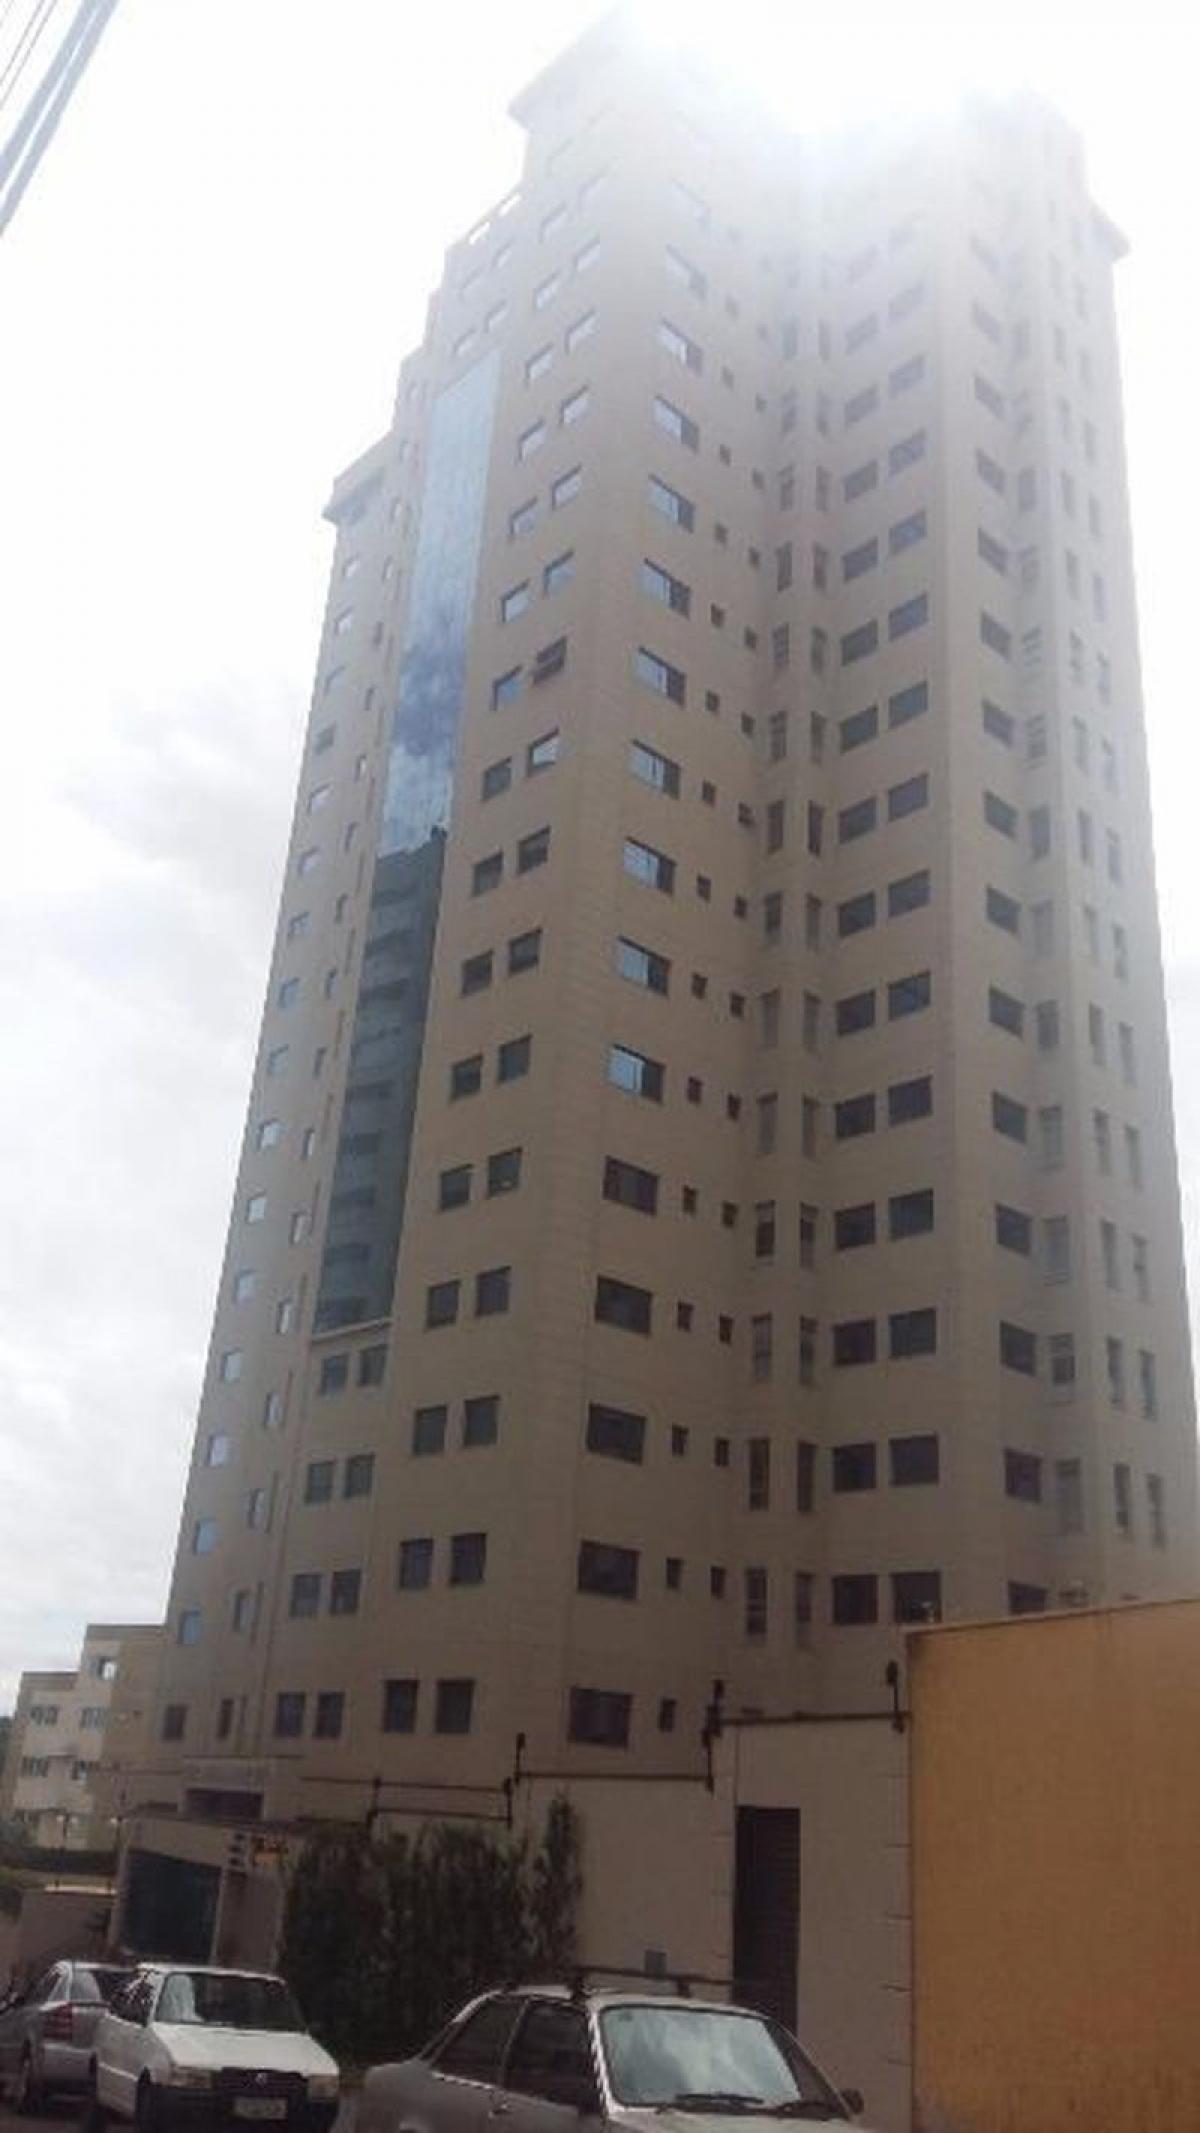 Picture of Commercial Building For Sale in Ribeirao Preto, Sao Paulo, Brazil